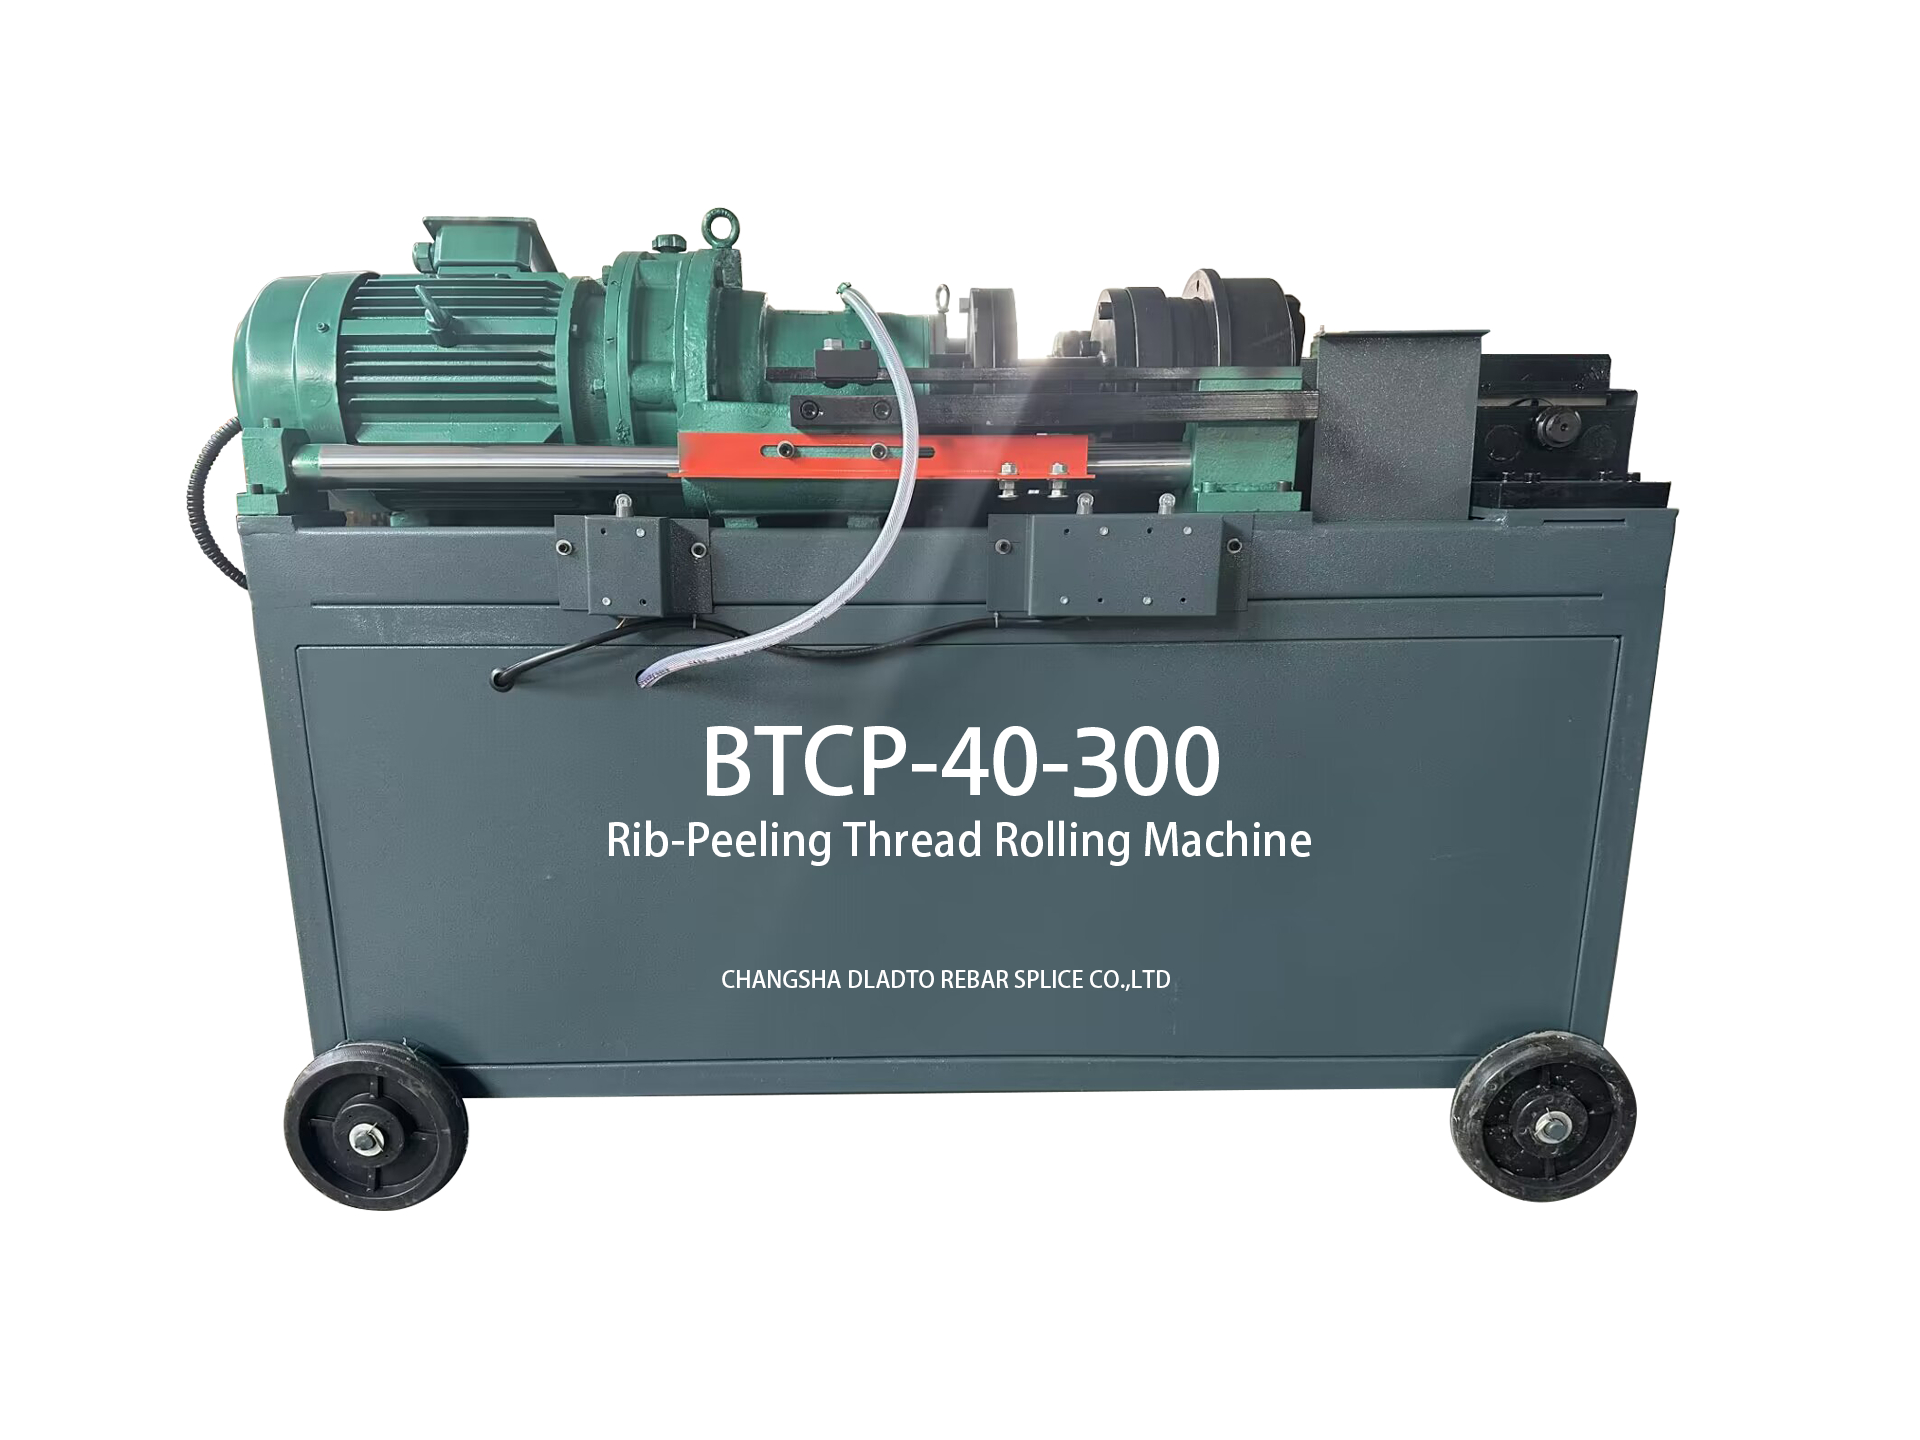 Rebar Rib -peeling And Threading Roller Machine BTCP-40-300